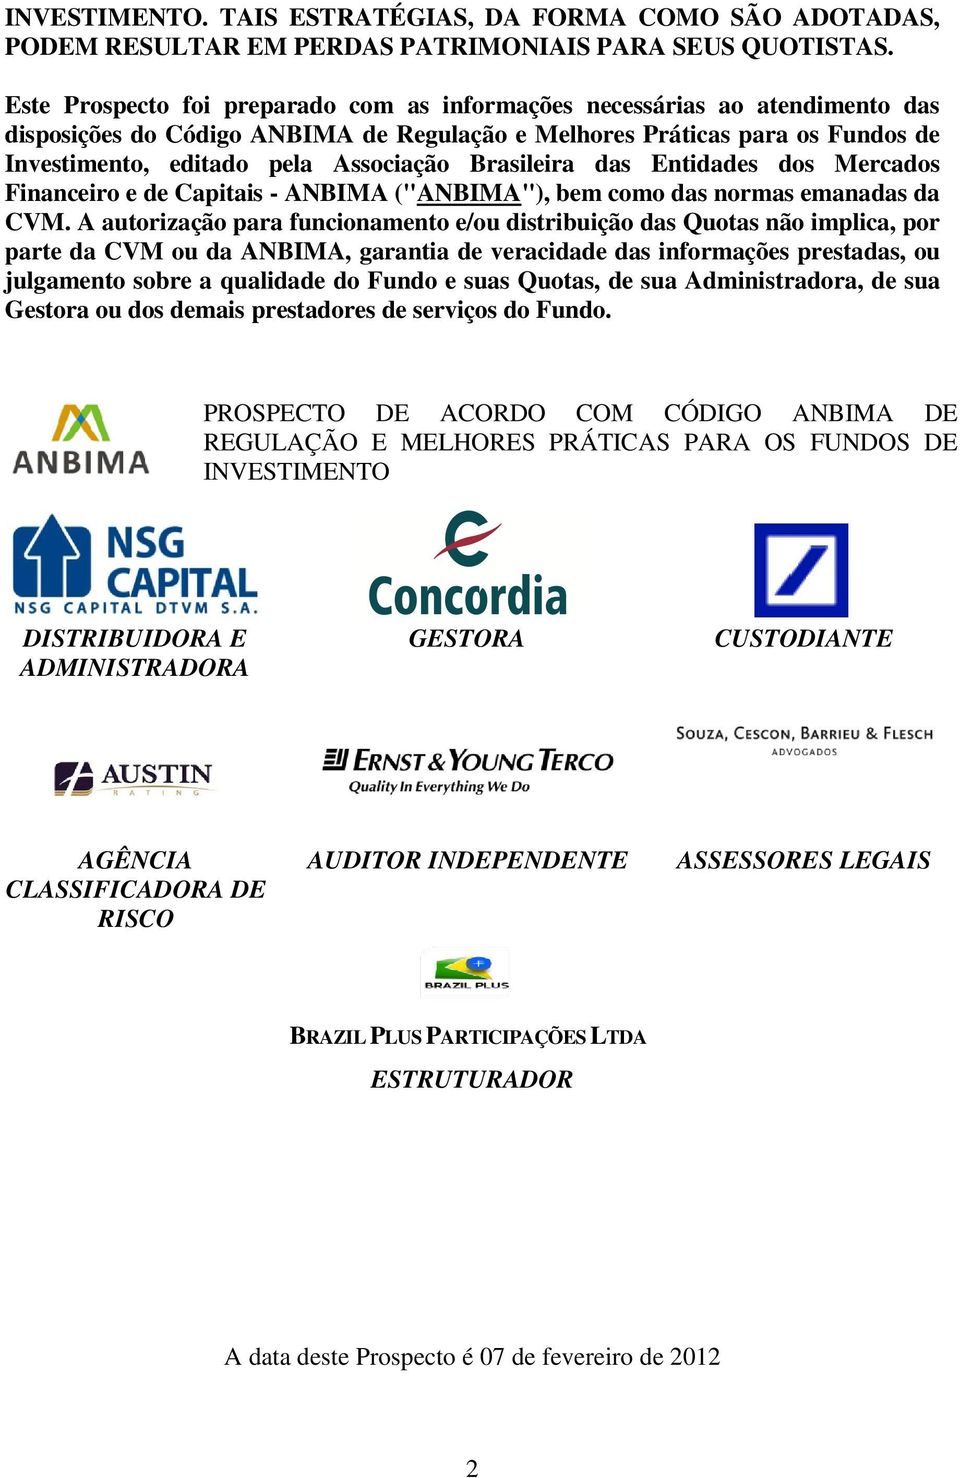 Brasileira das Entidades dos Mercados Financeiro e de Capitais - ANBIMA ("ANBIMA"), bem como das normas emanadas da CVM.